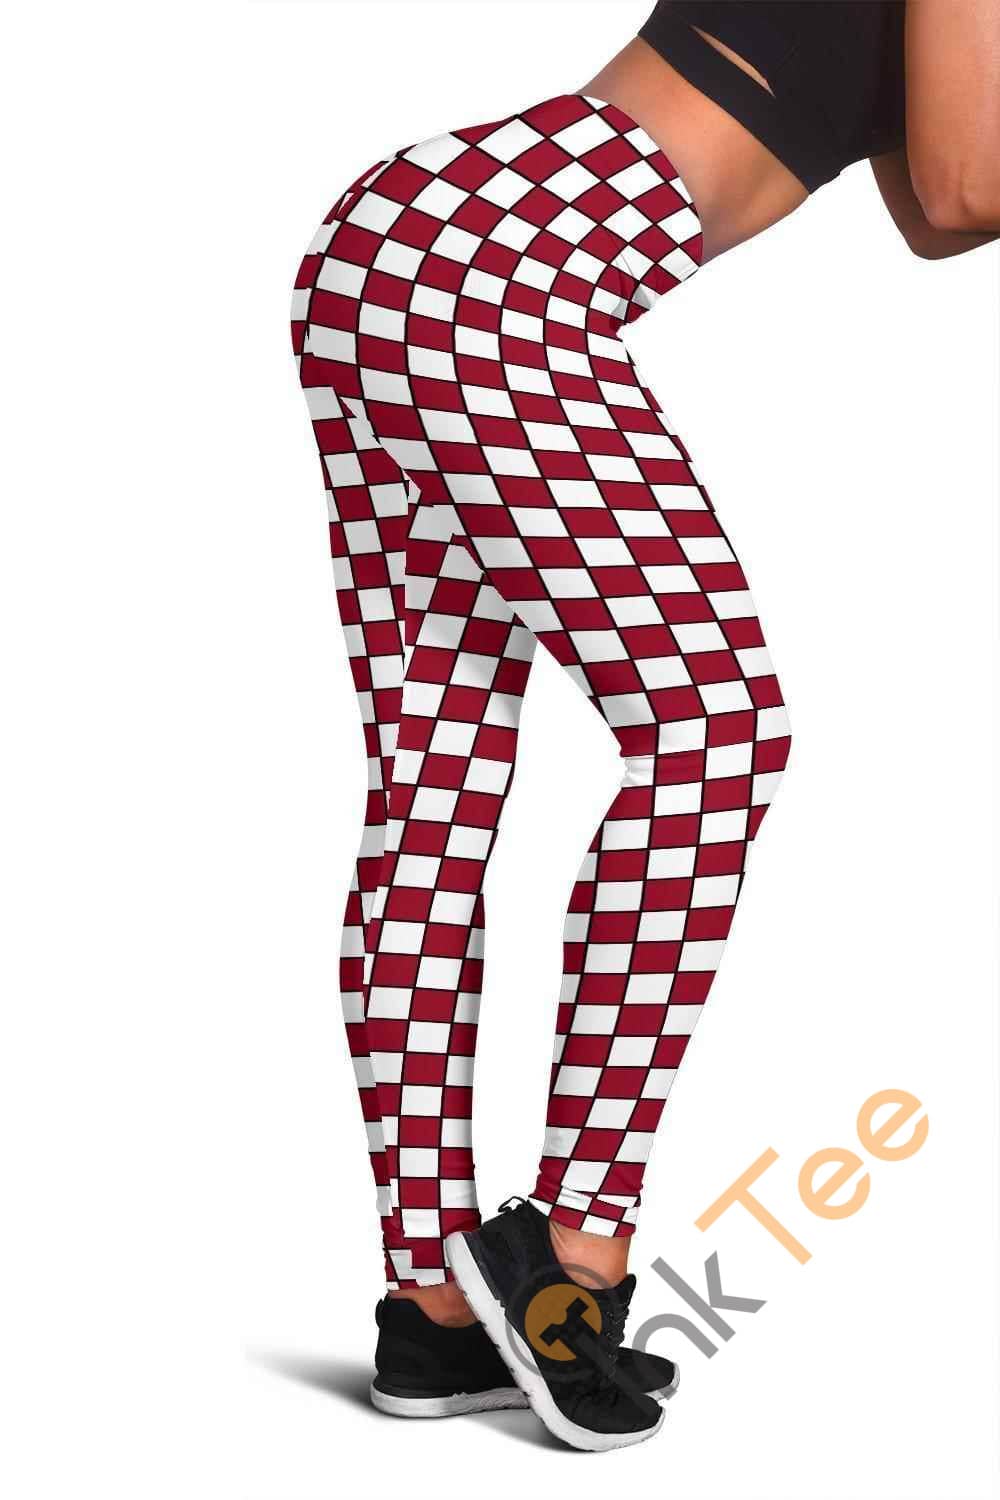 Inktee Store - Alabama Crimson Tide Fan Inspired 3D All Over Print For Yoga Fitness Checkers Women'S Leggings Image